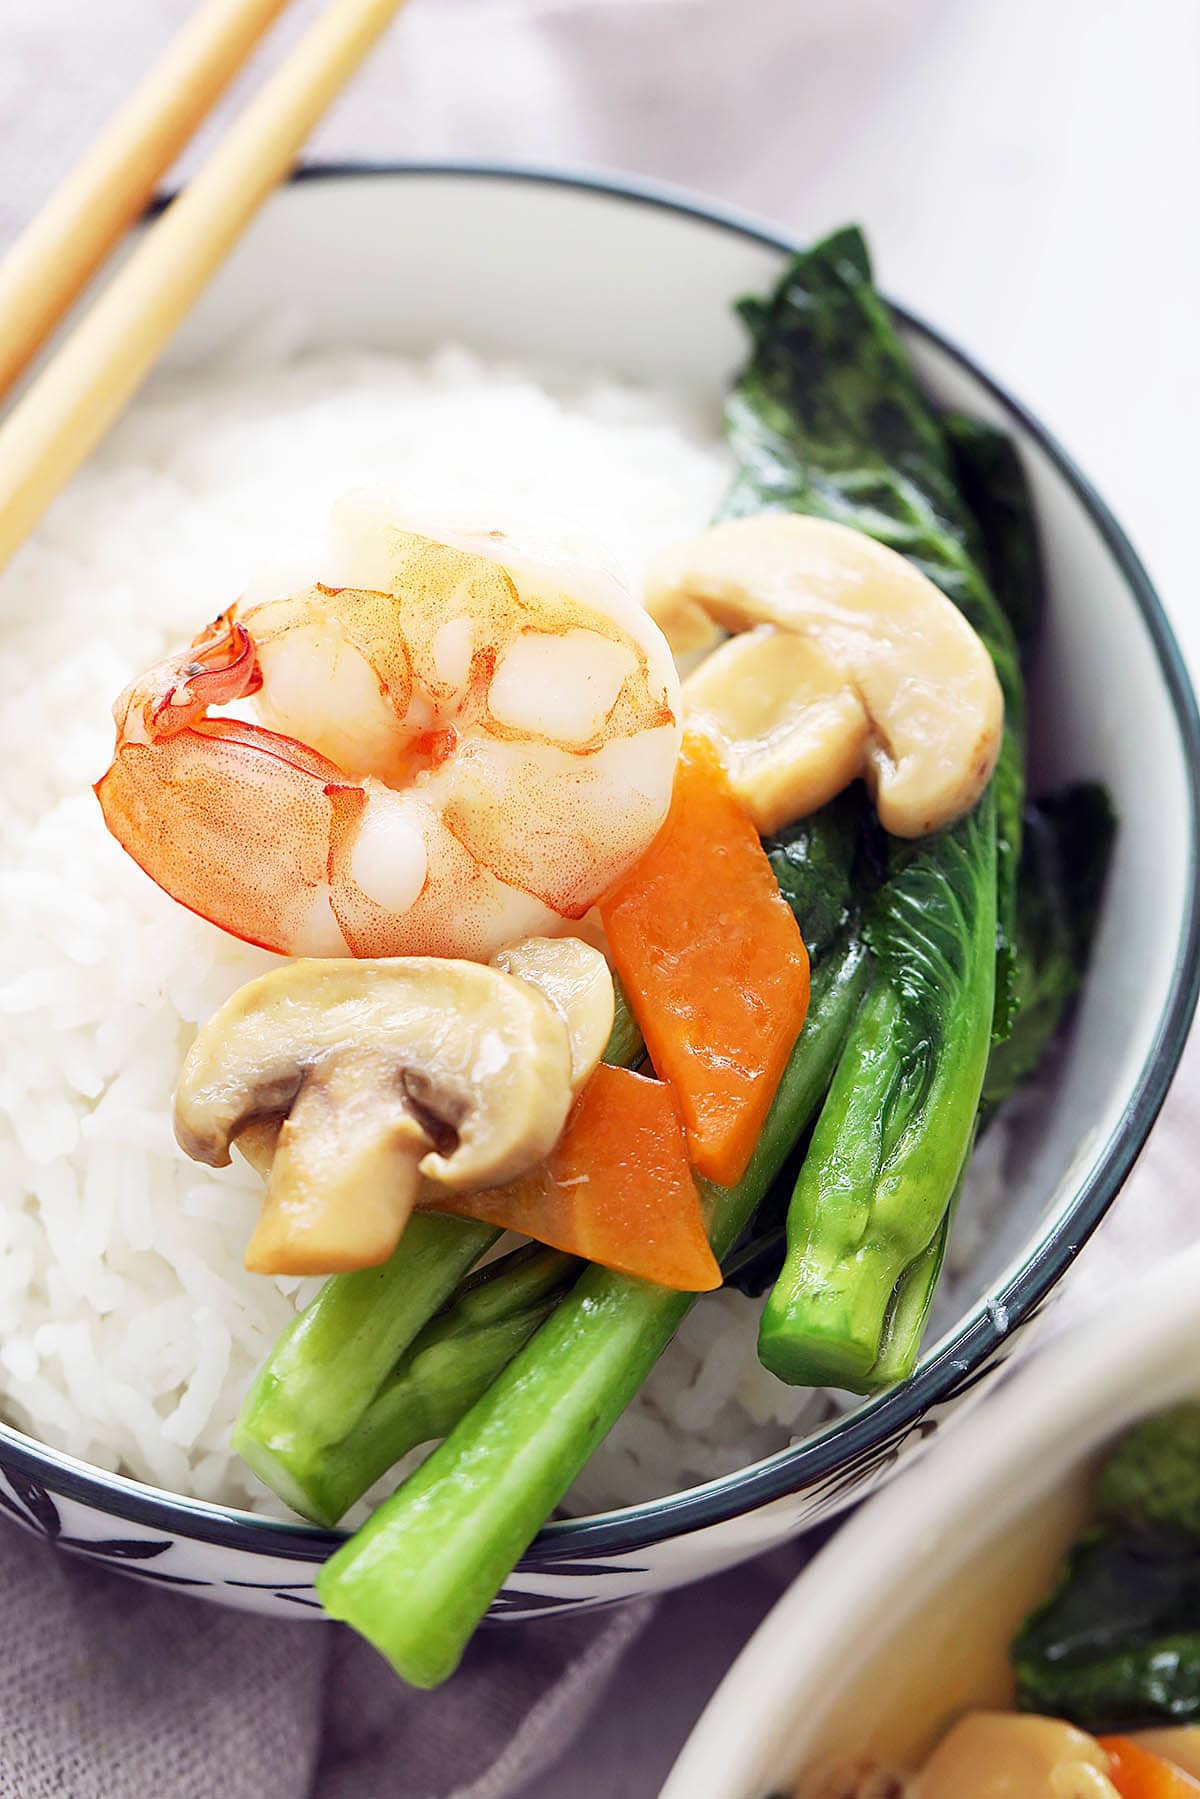 Choy sum stir fry with shrimp in a bowl. 